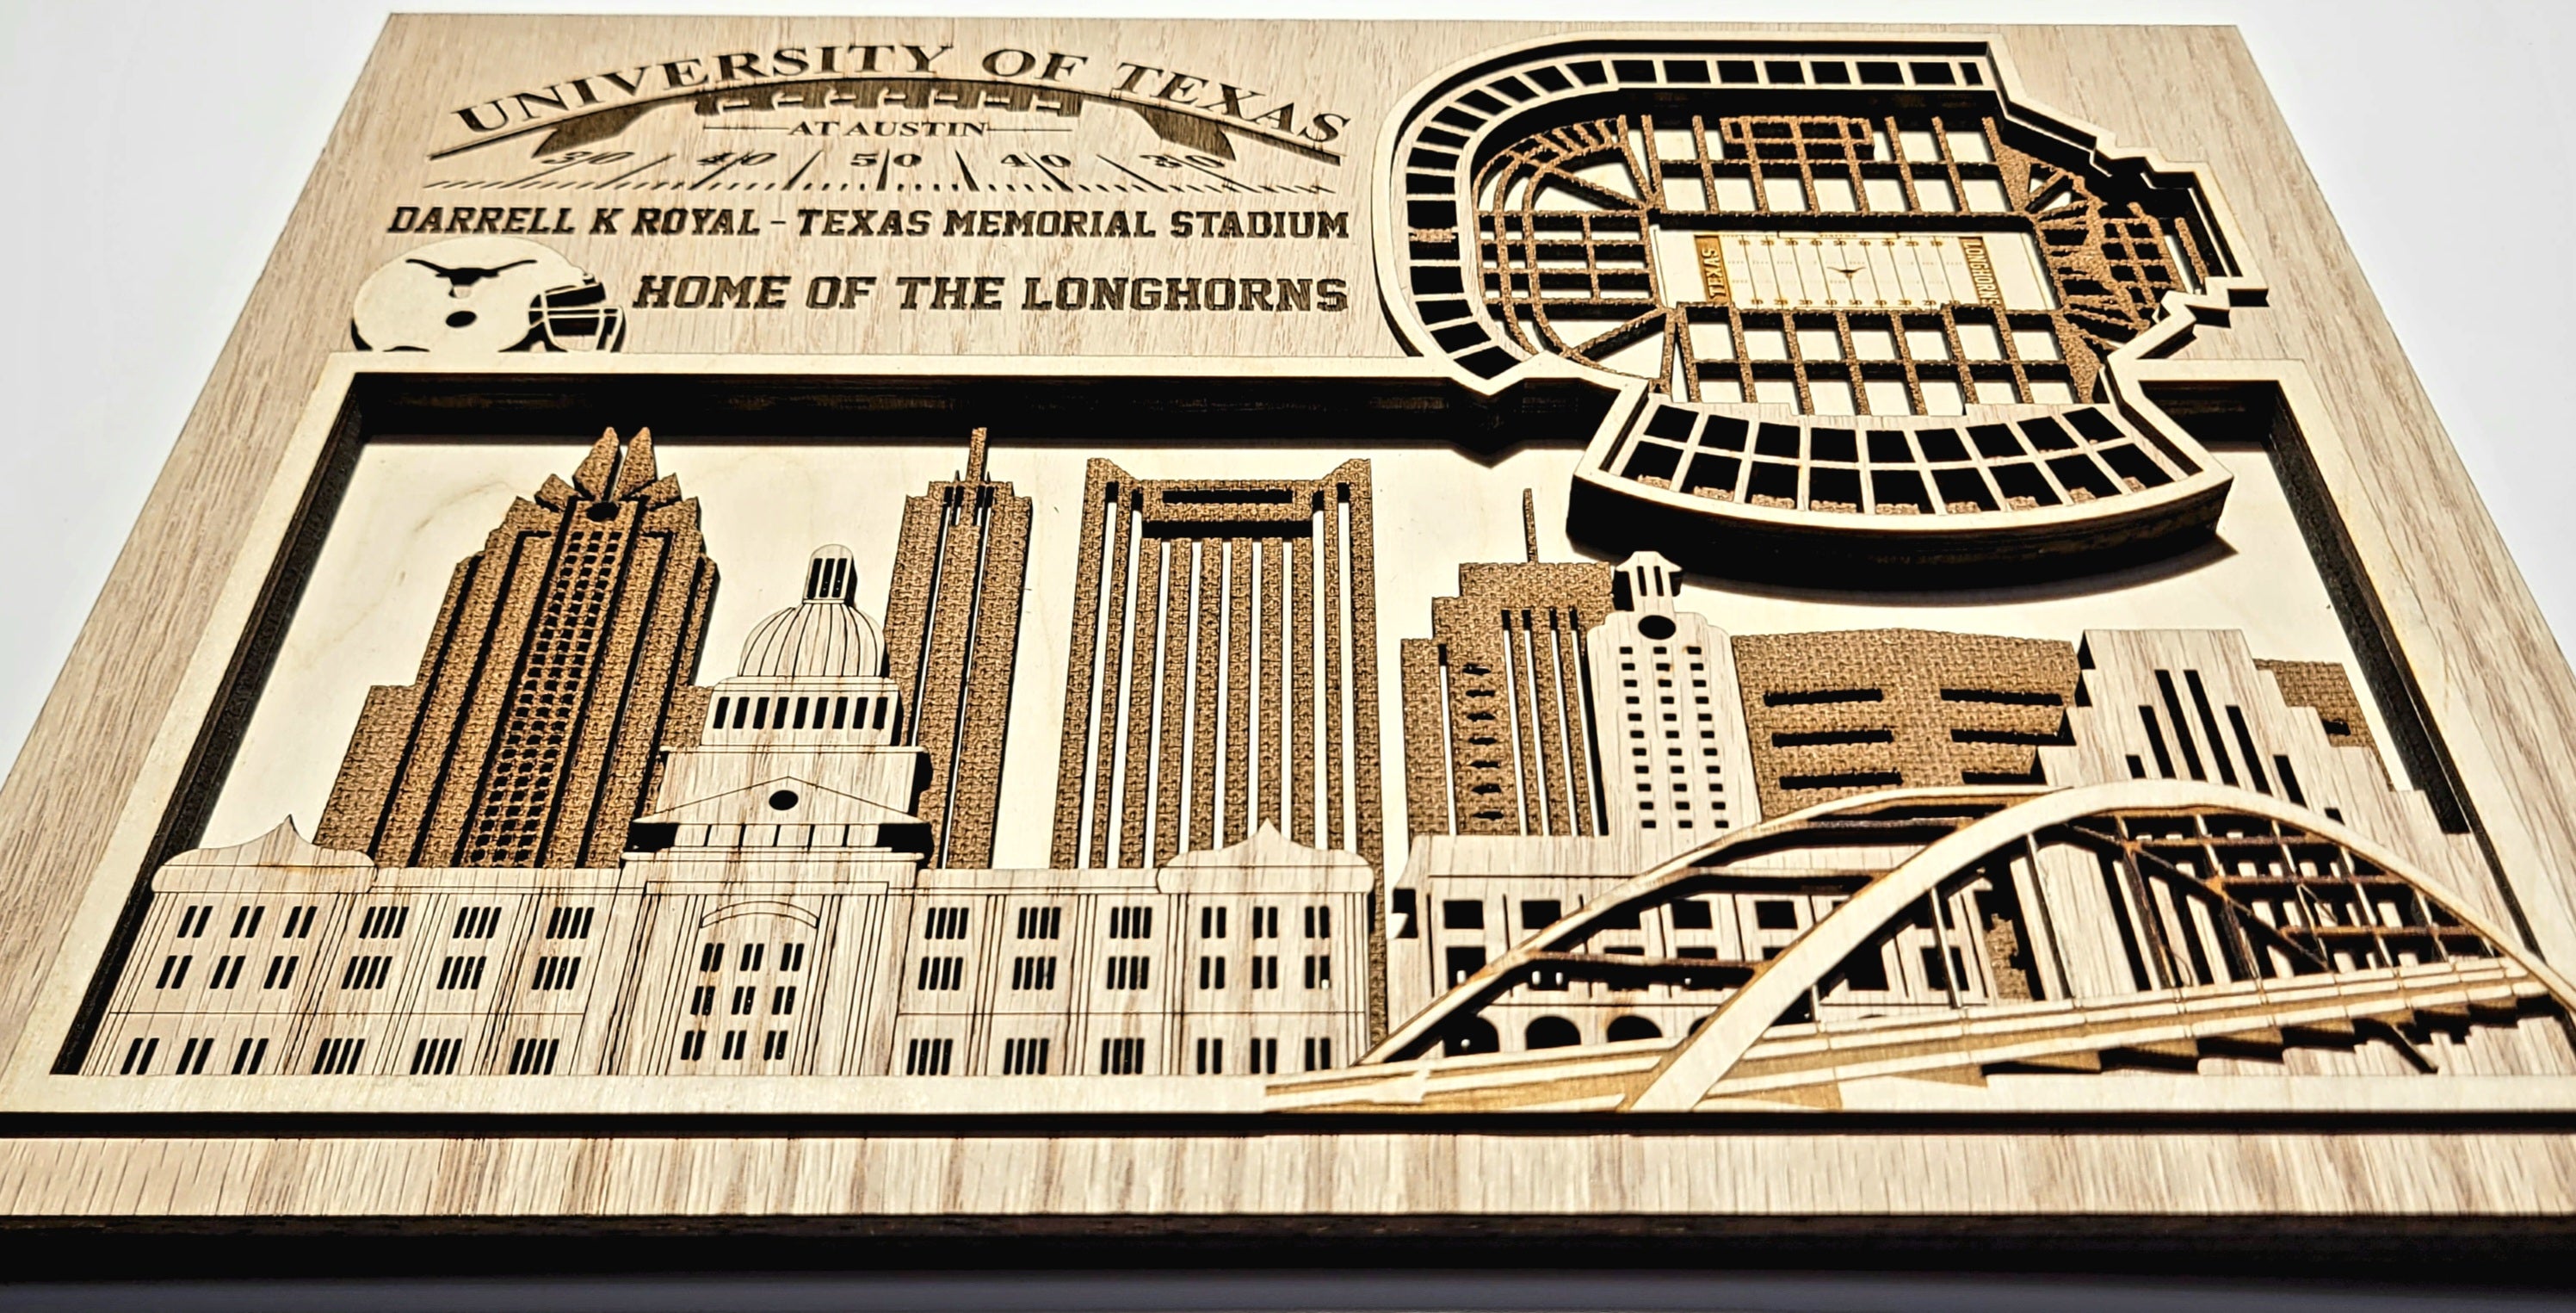 Texas Memorial Stadium - Darrell K Royal  - Home of the Texas Longhorns